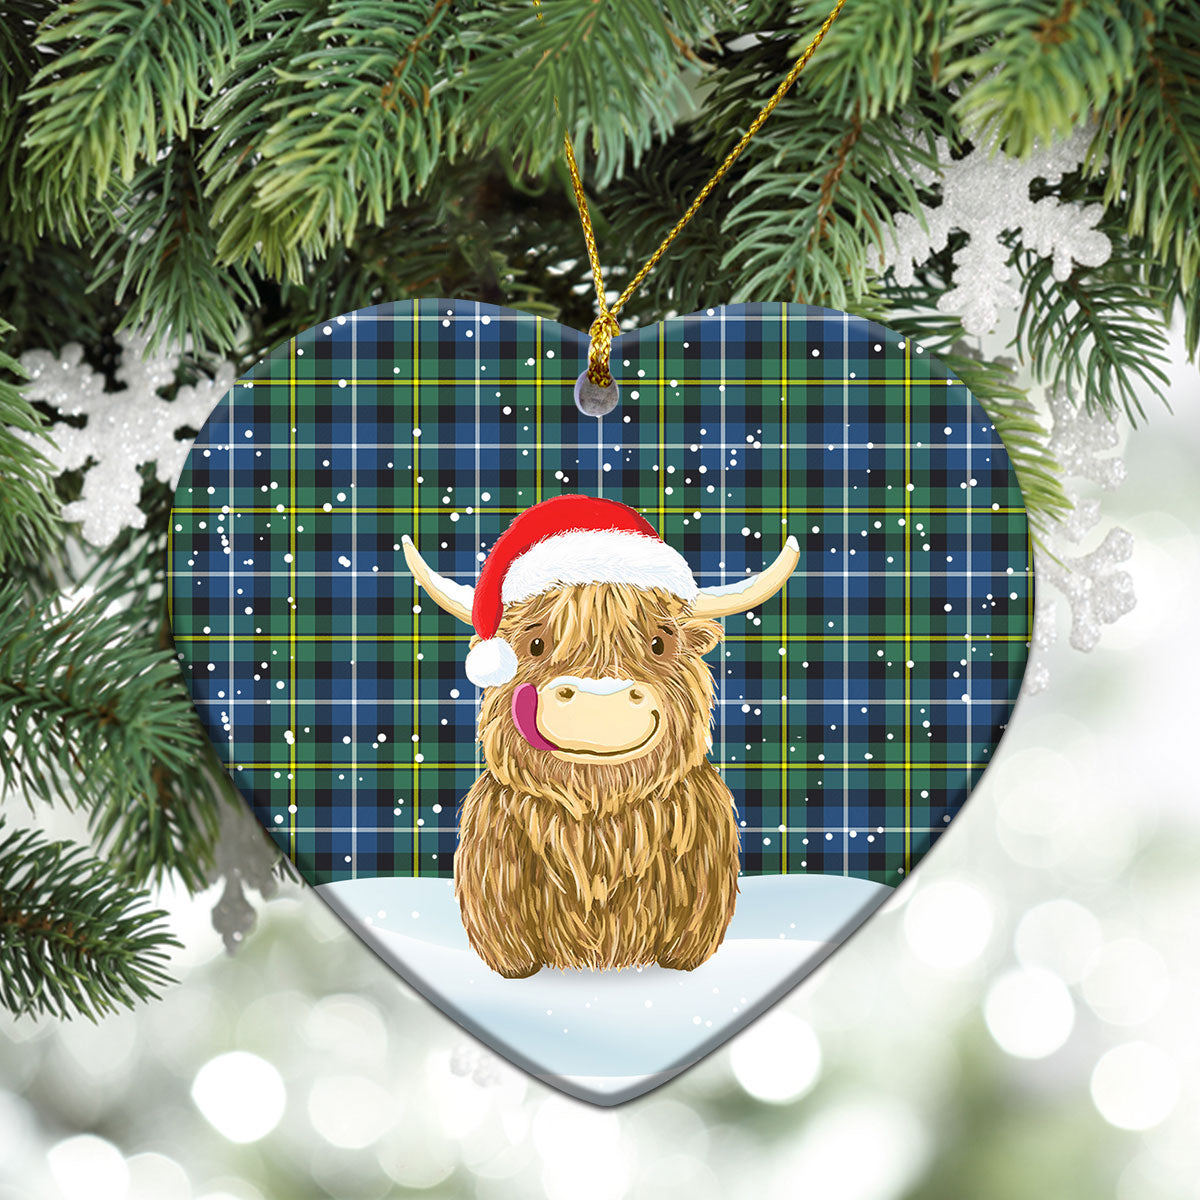 MacNeill of Barra Ancient Tartan Christmas Ceramic Ornament - Highland Cows Style